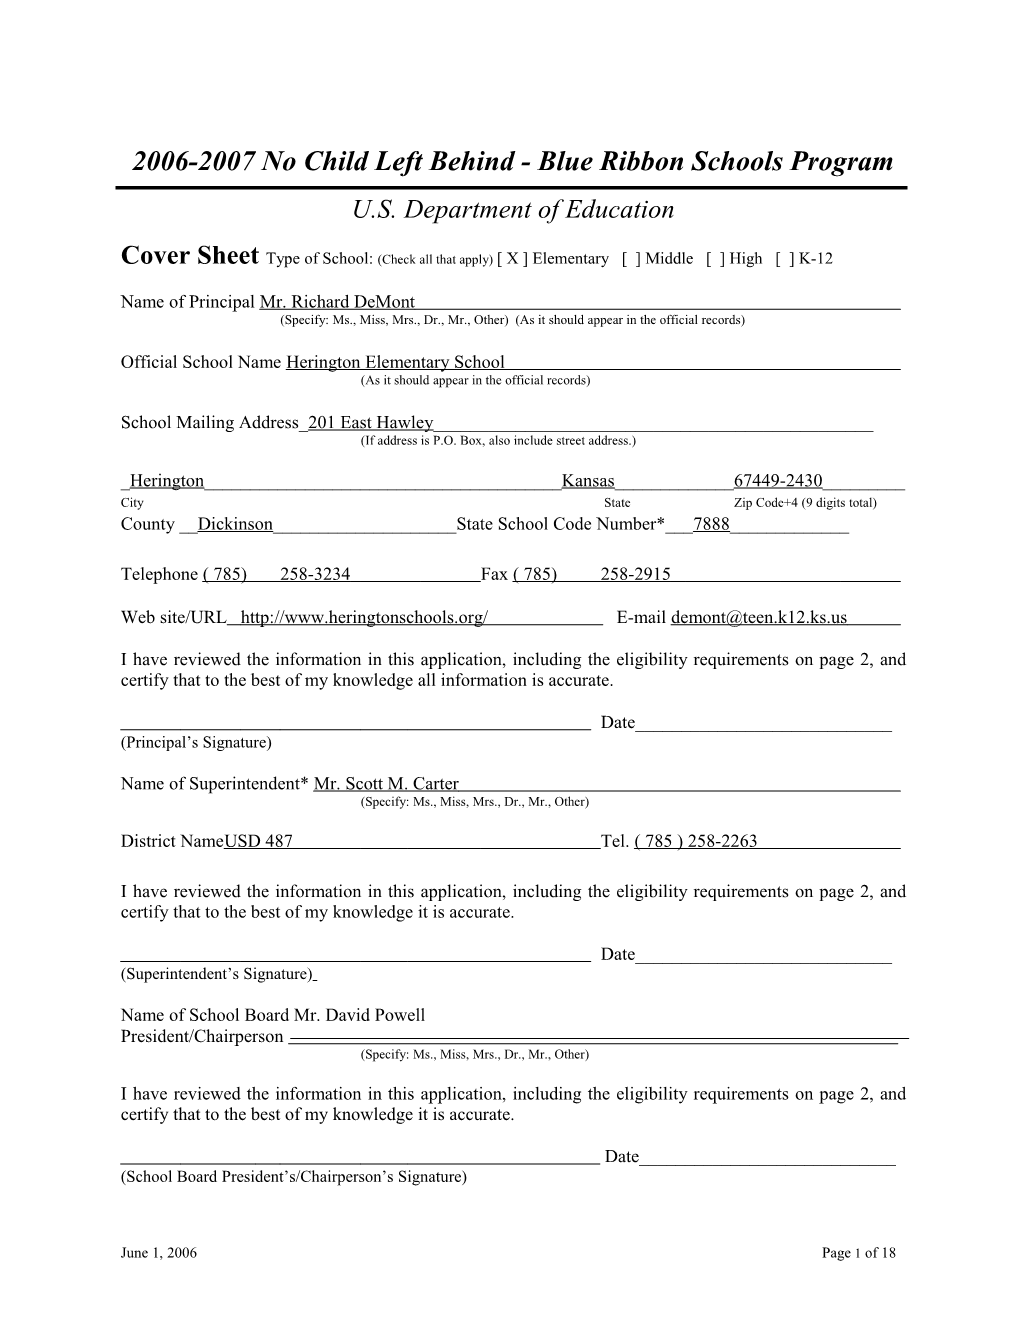 Application: 2006-2007, No Child Left Behind - Blue Ribbon Schools Program (MS Word) s23